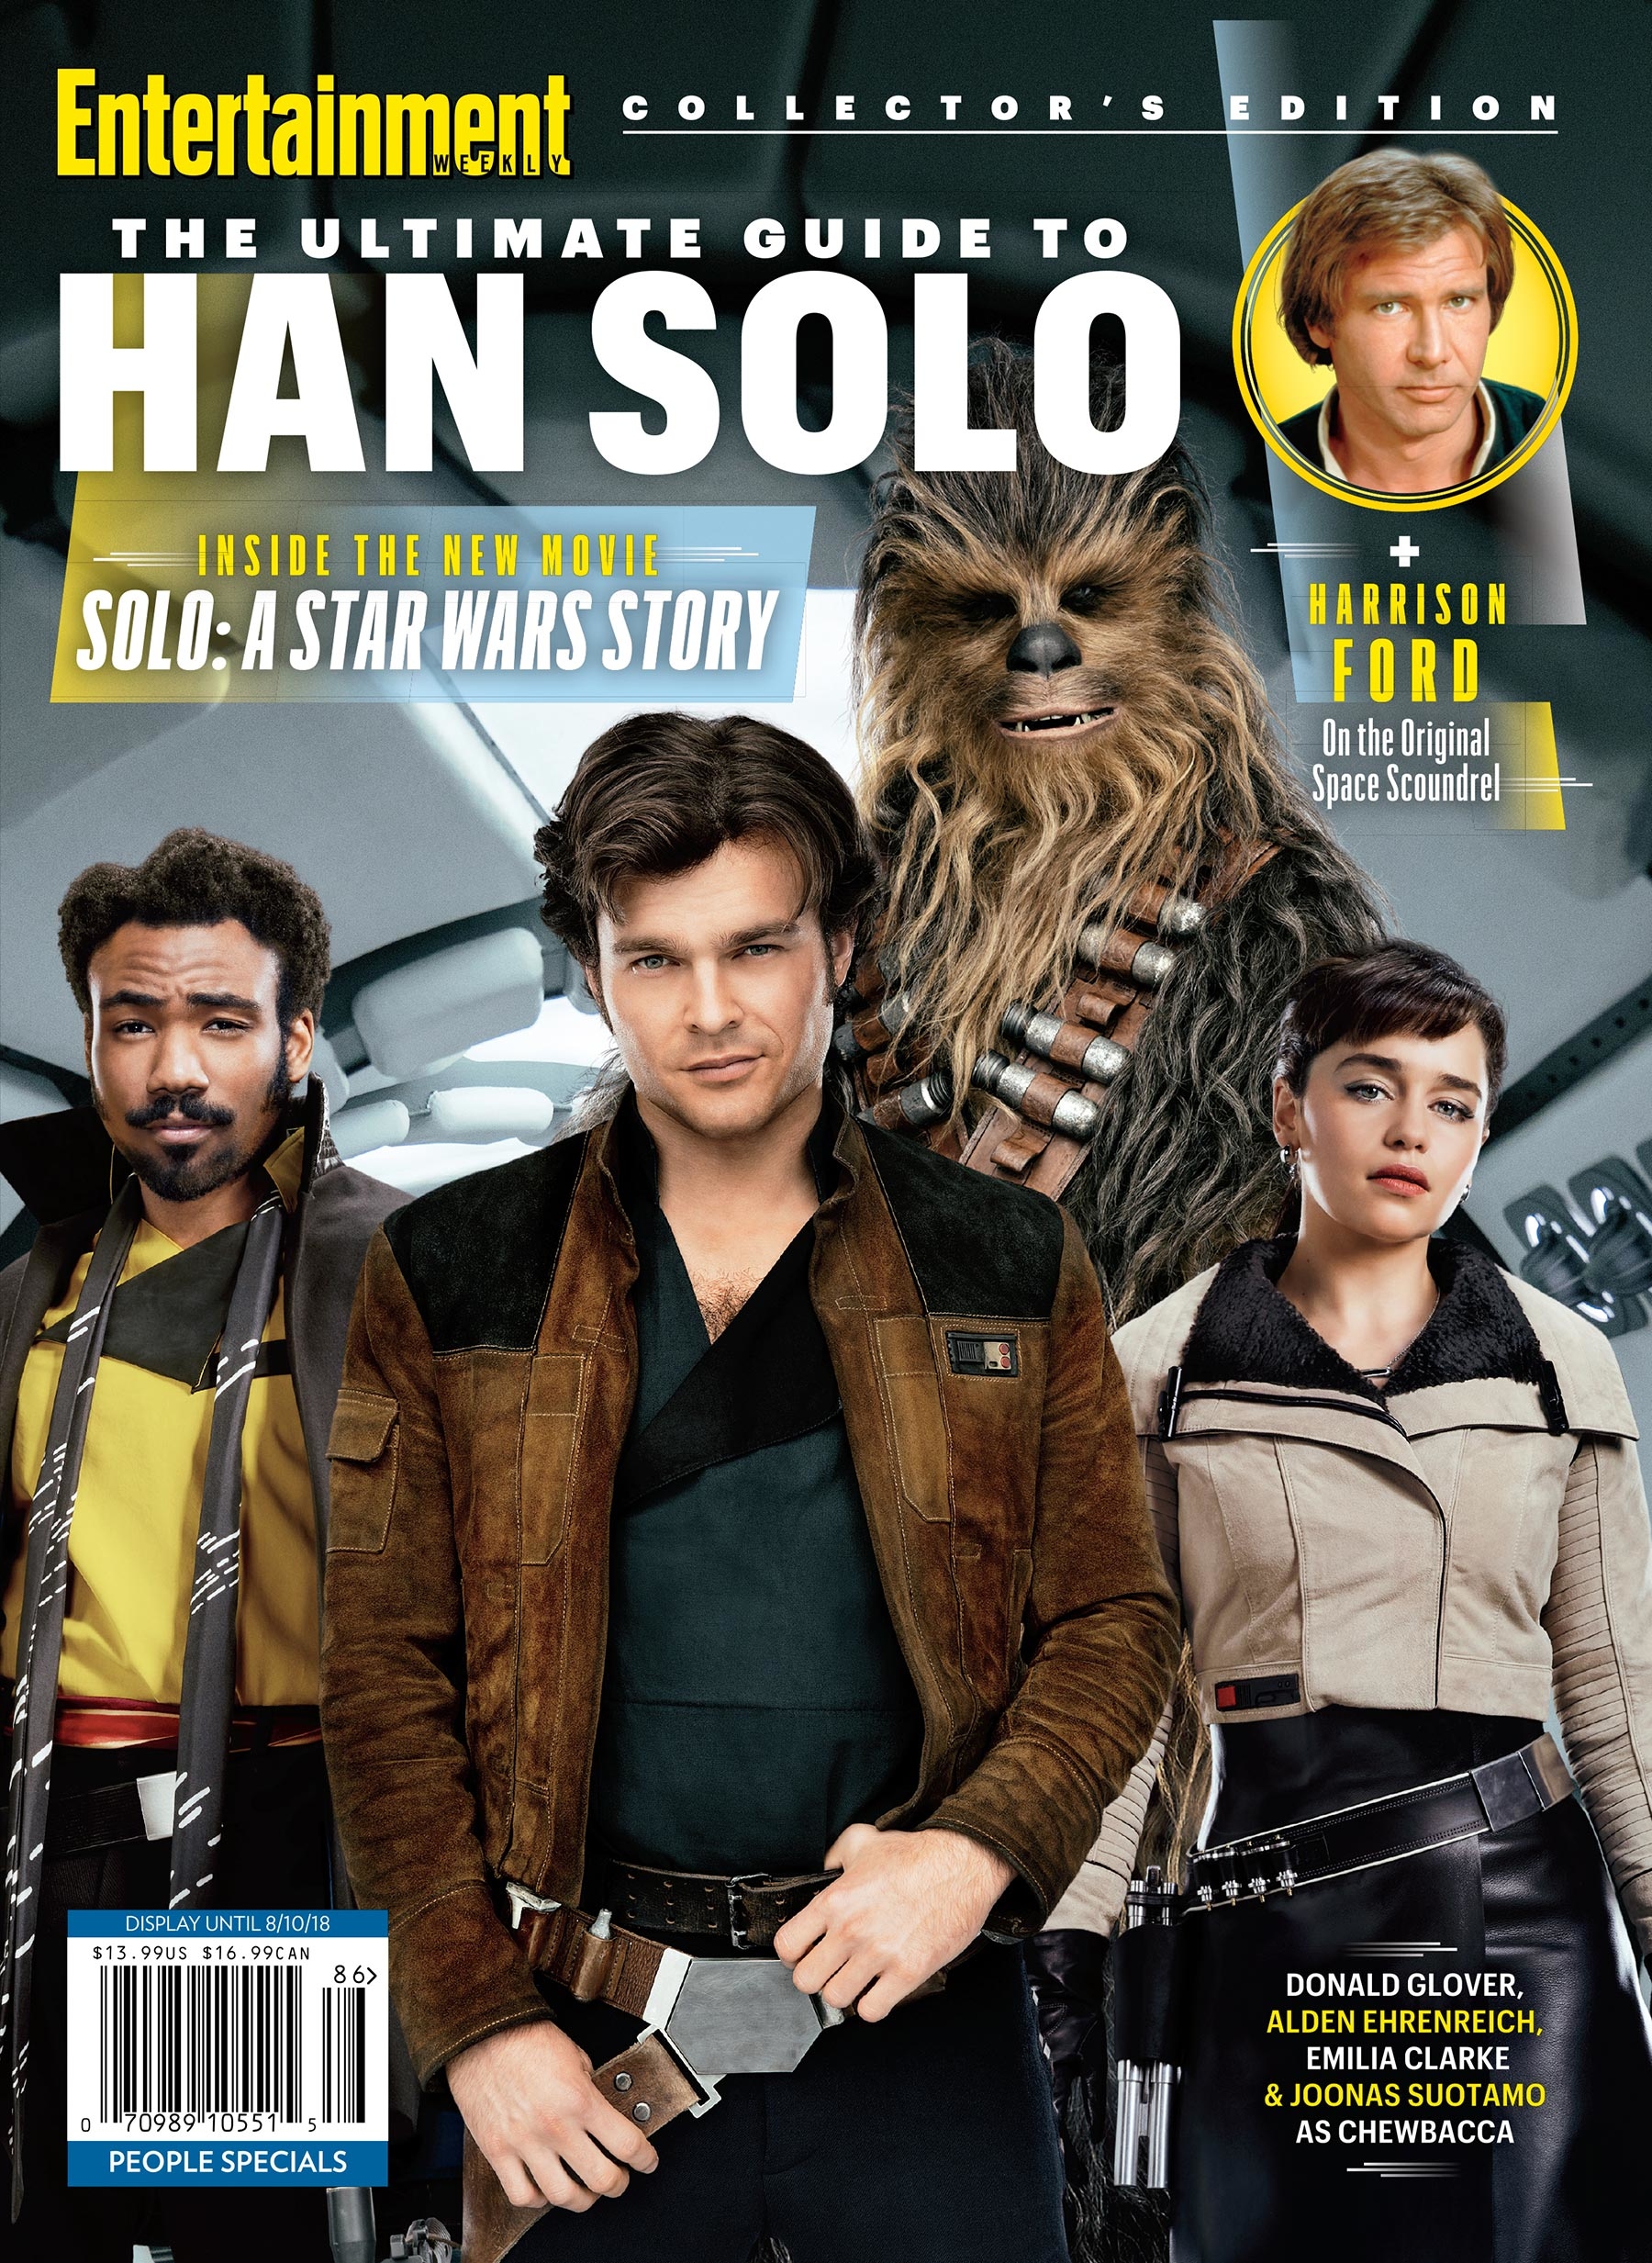 Solo: A Star Wars Story, Wookieepedia